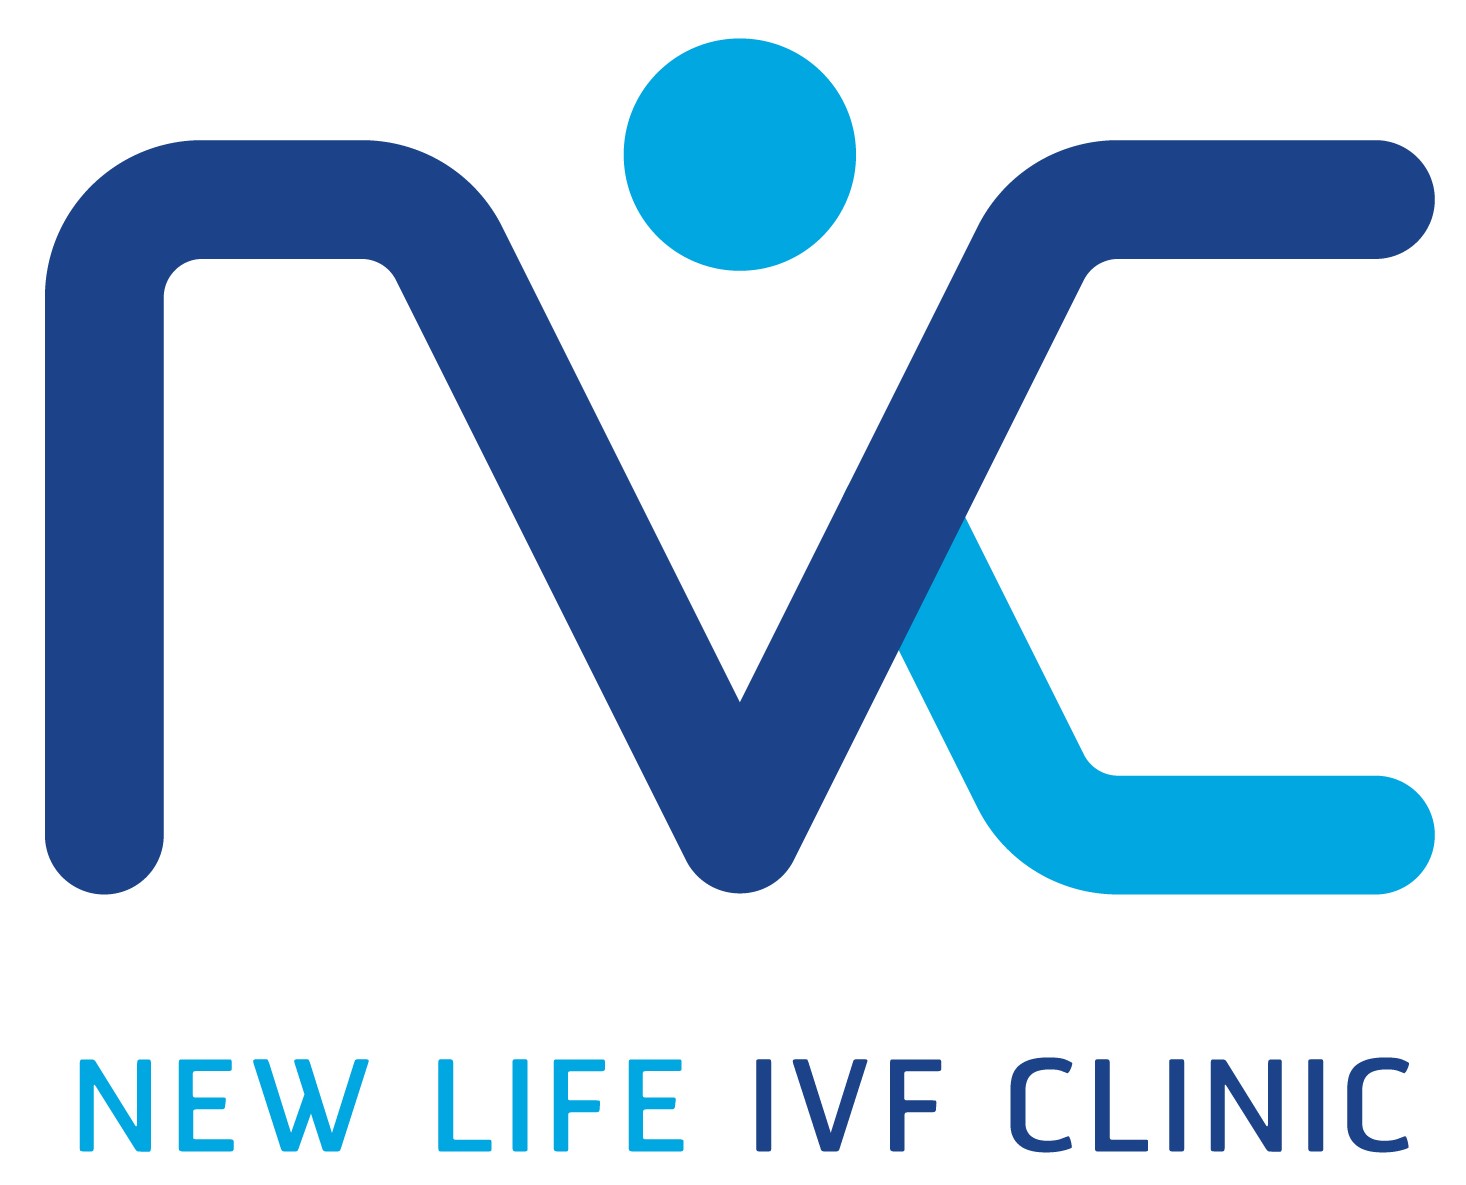 NEW LIFE IVF CLINIC